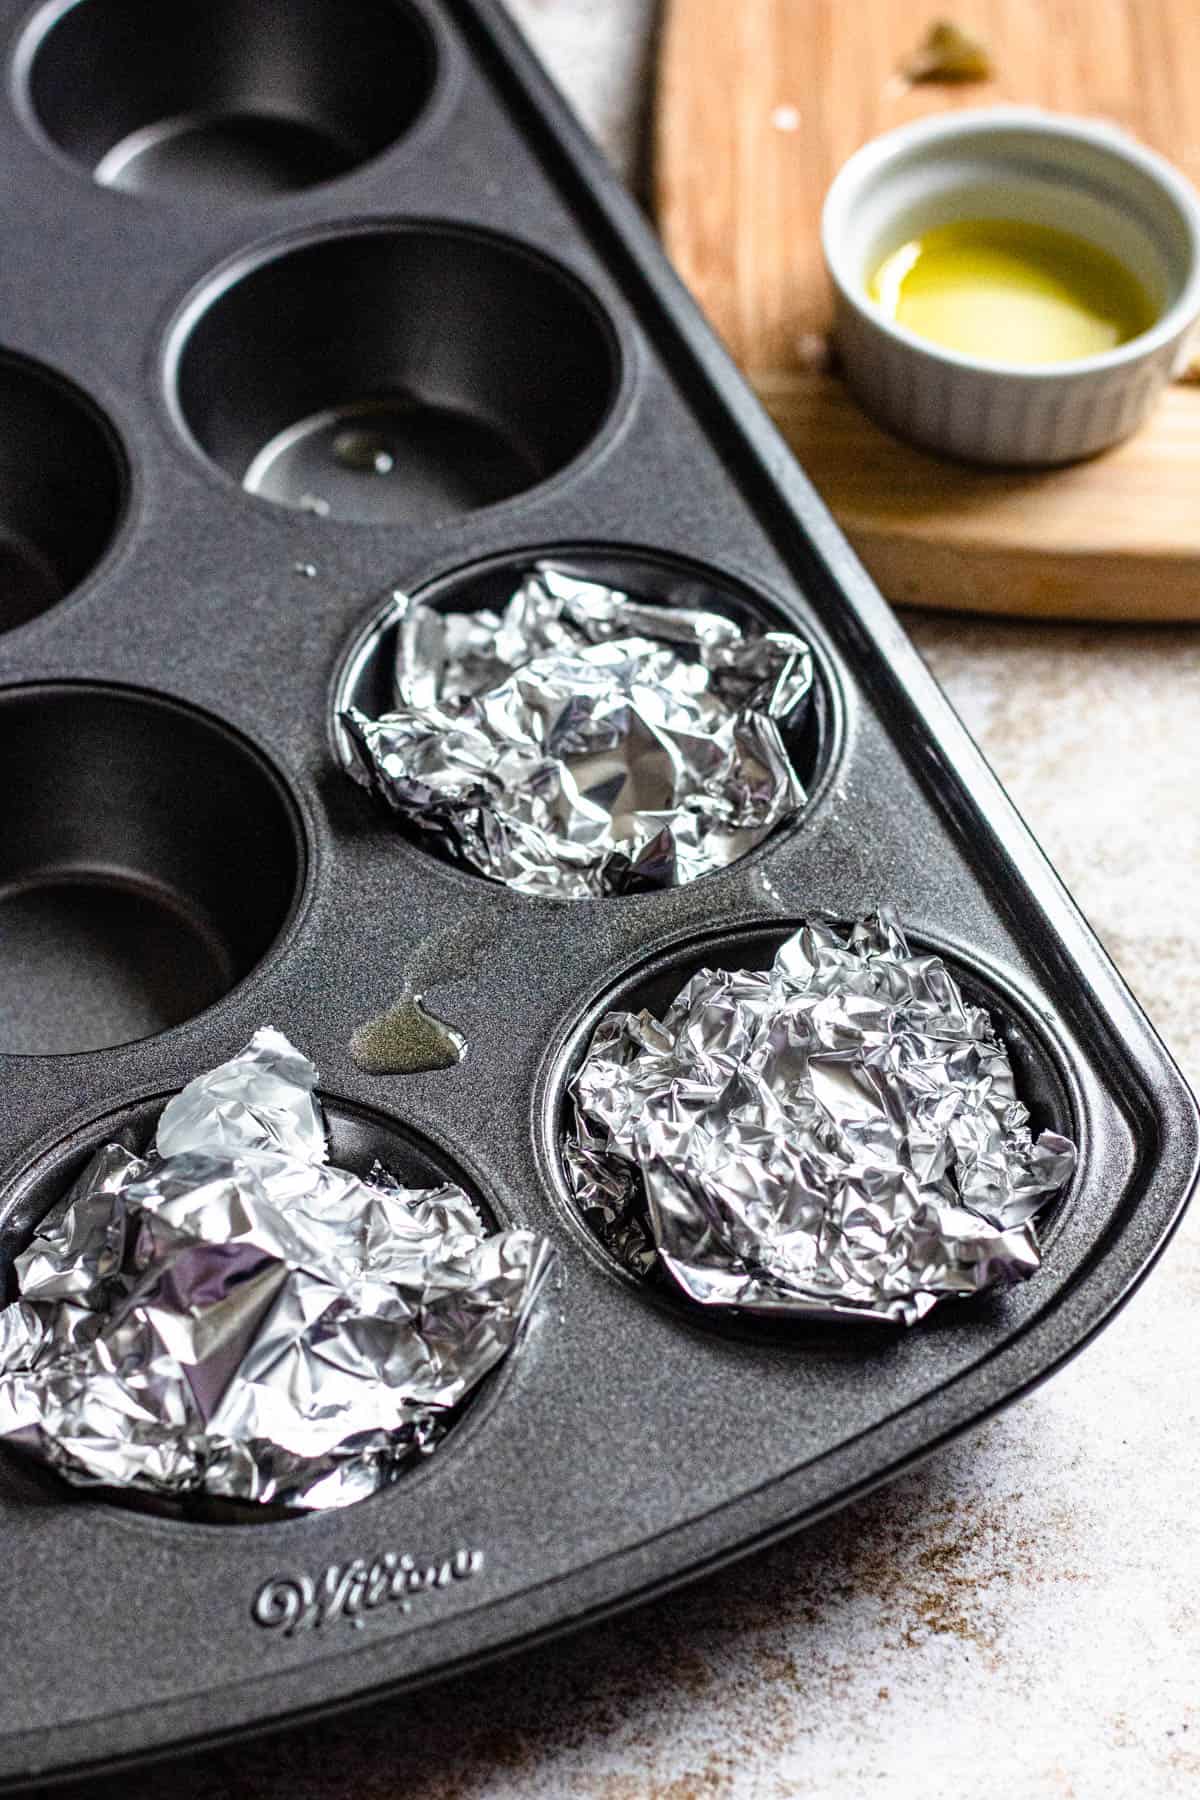 tinfoil covering garlic bulbs in muffin tin